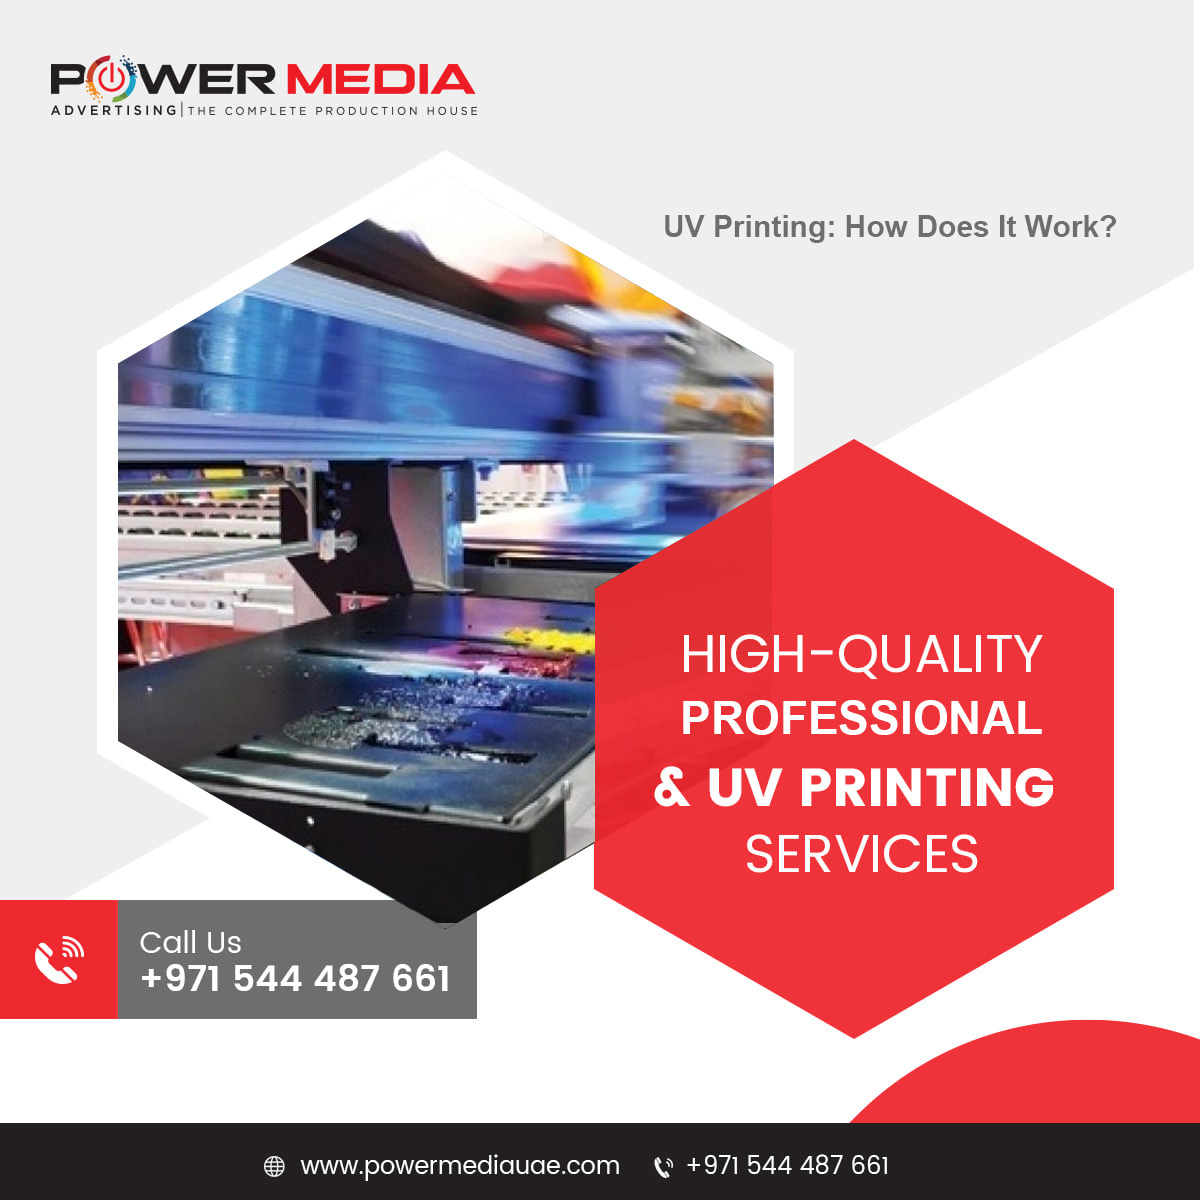 UV printing services in Dubai